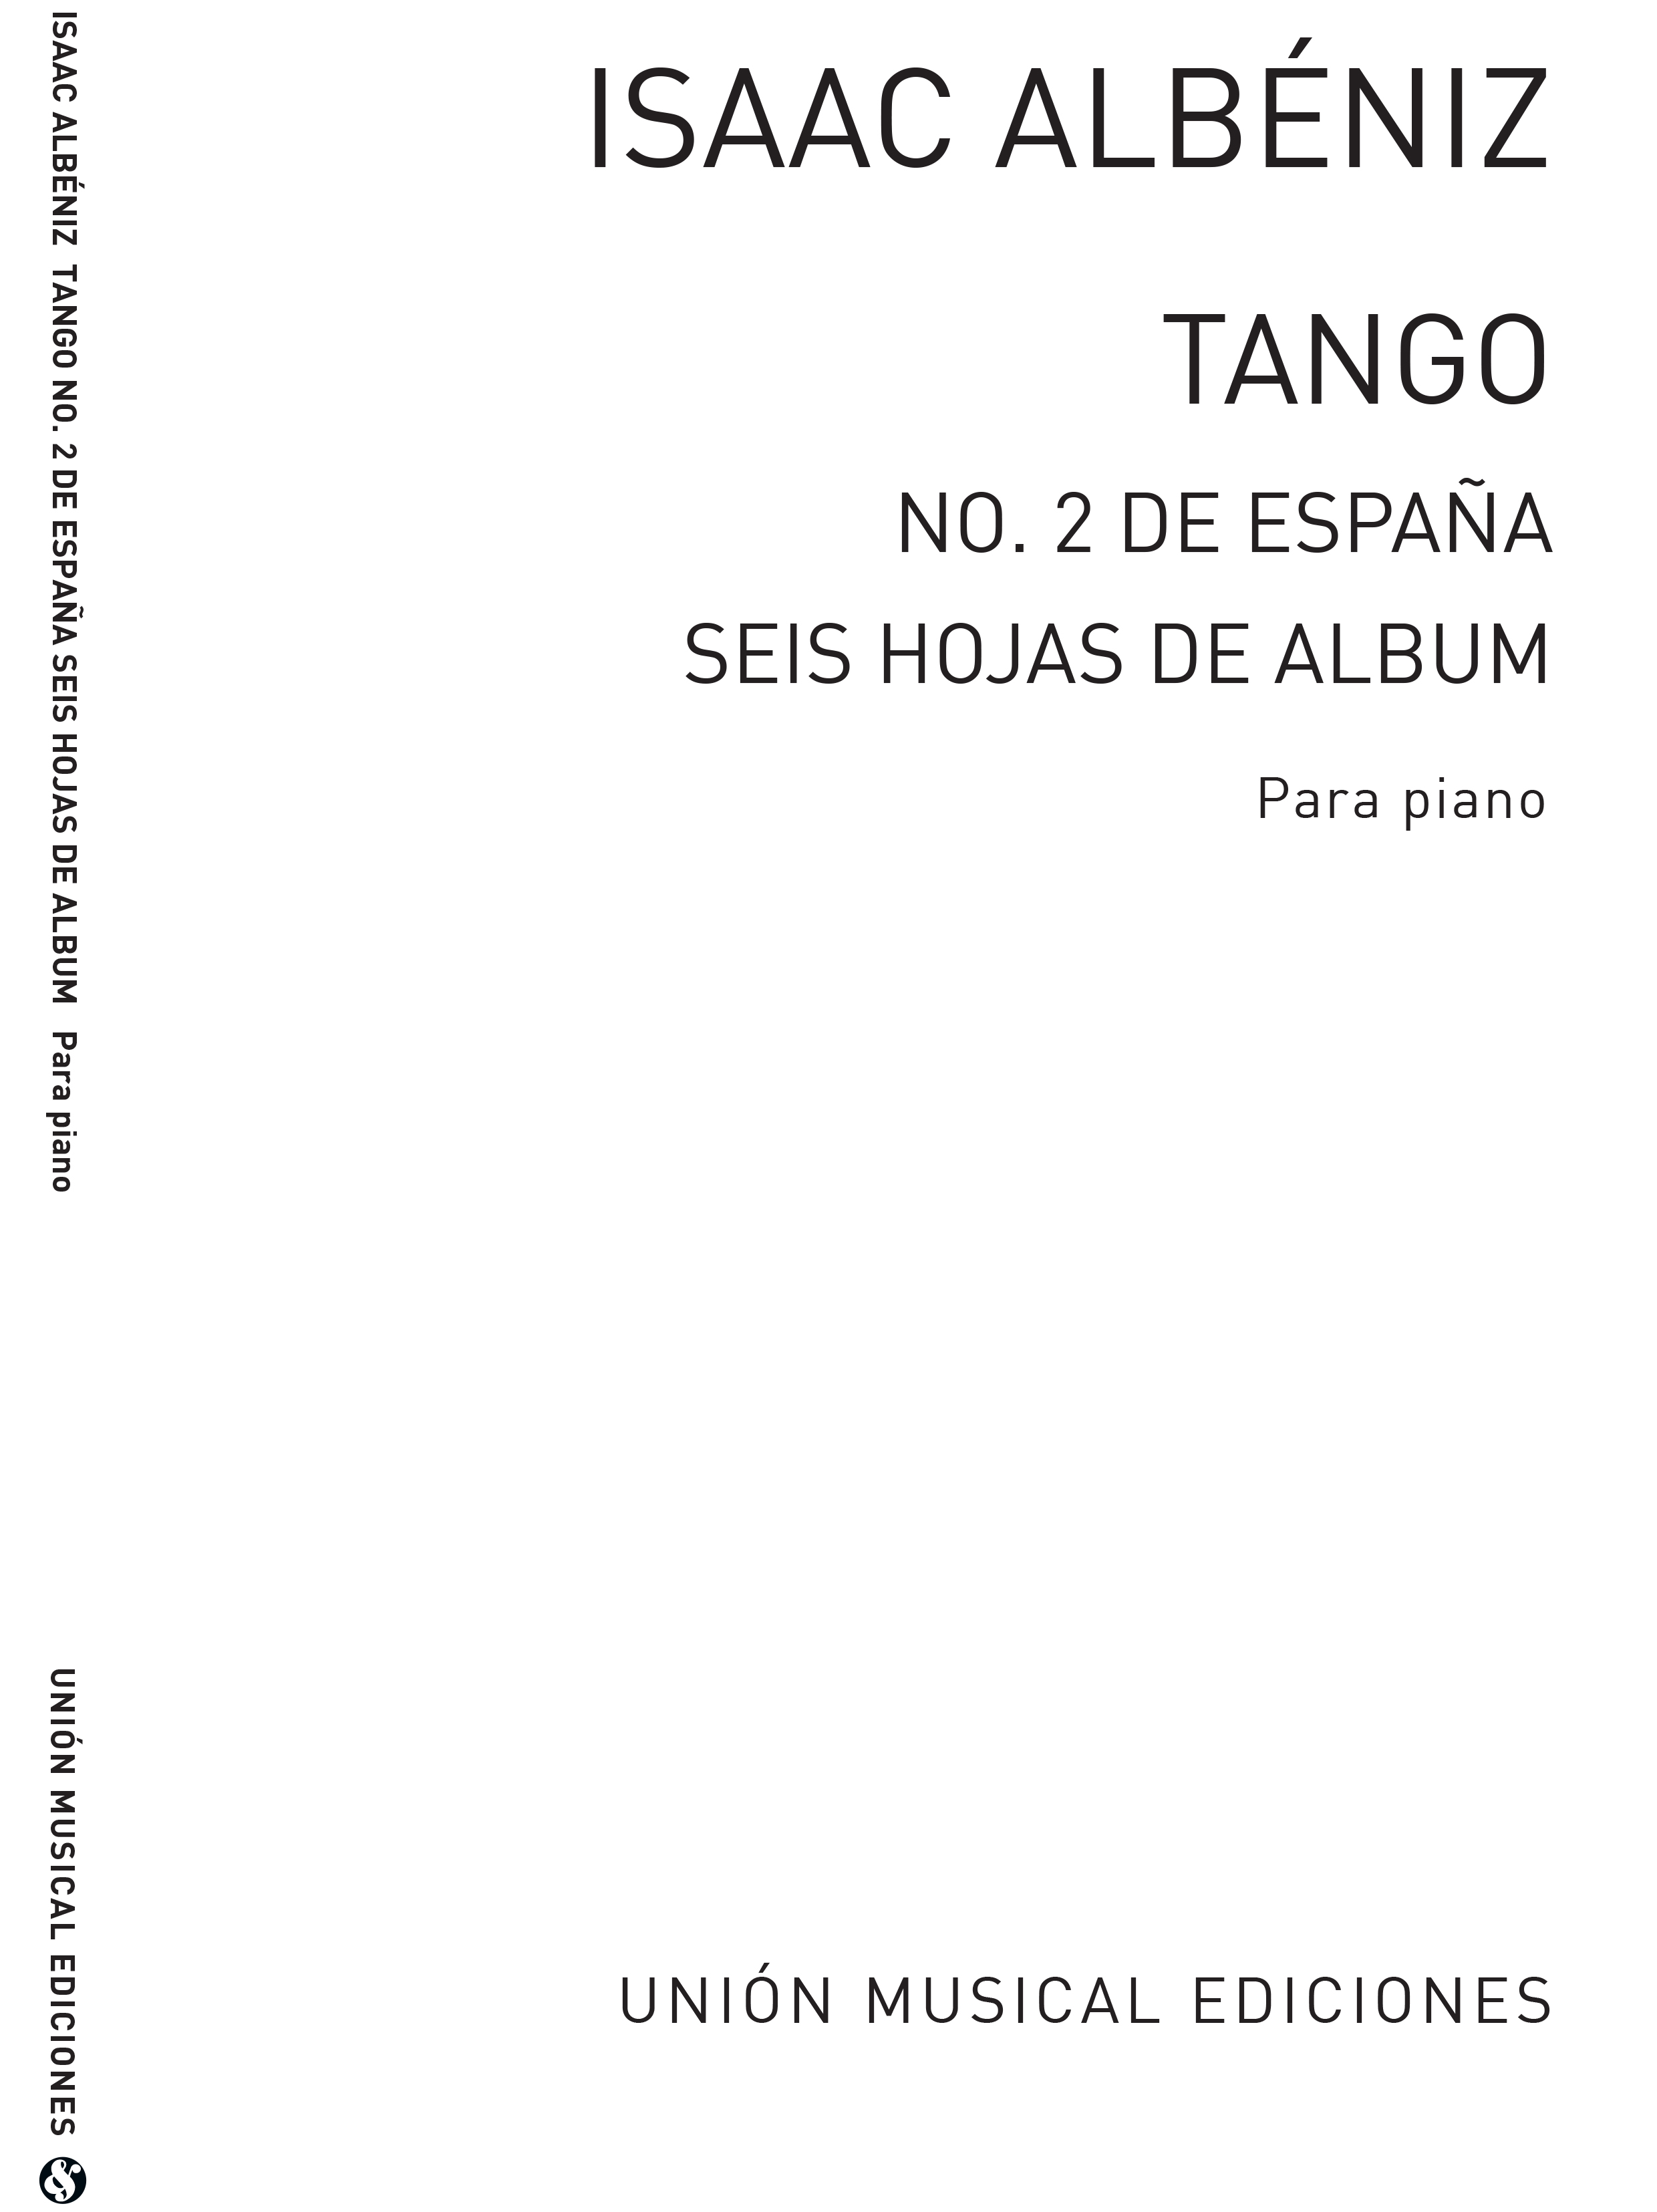 Isaac Albéniz: Tango in D from Espana Op. 165 No.2: Piano: Instrumental Album